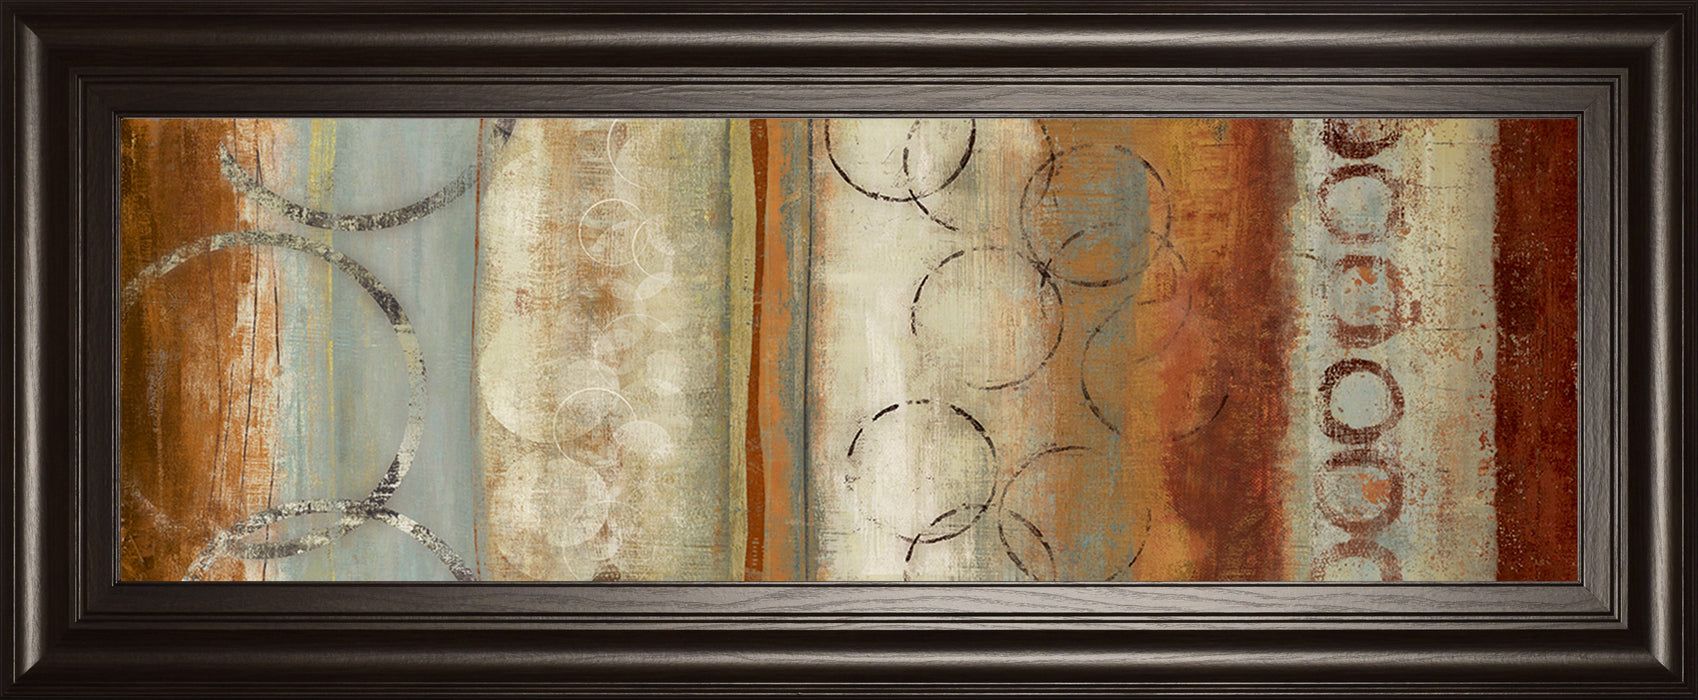 Juncture I By Tom Reeves - Framed Print Wall Art - Dark Brown